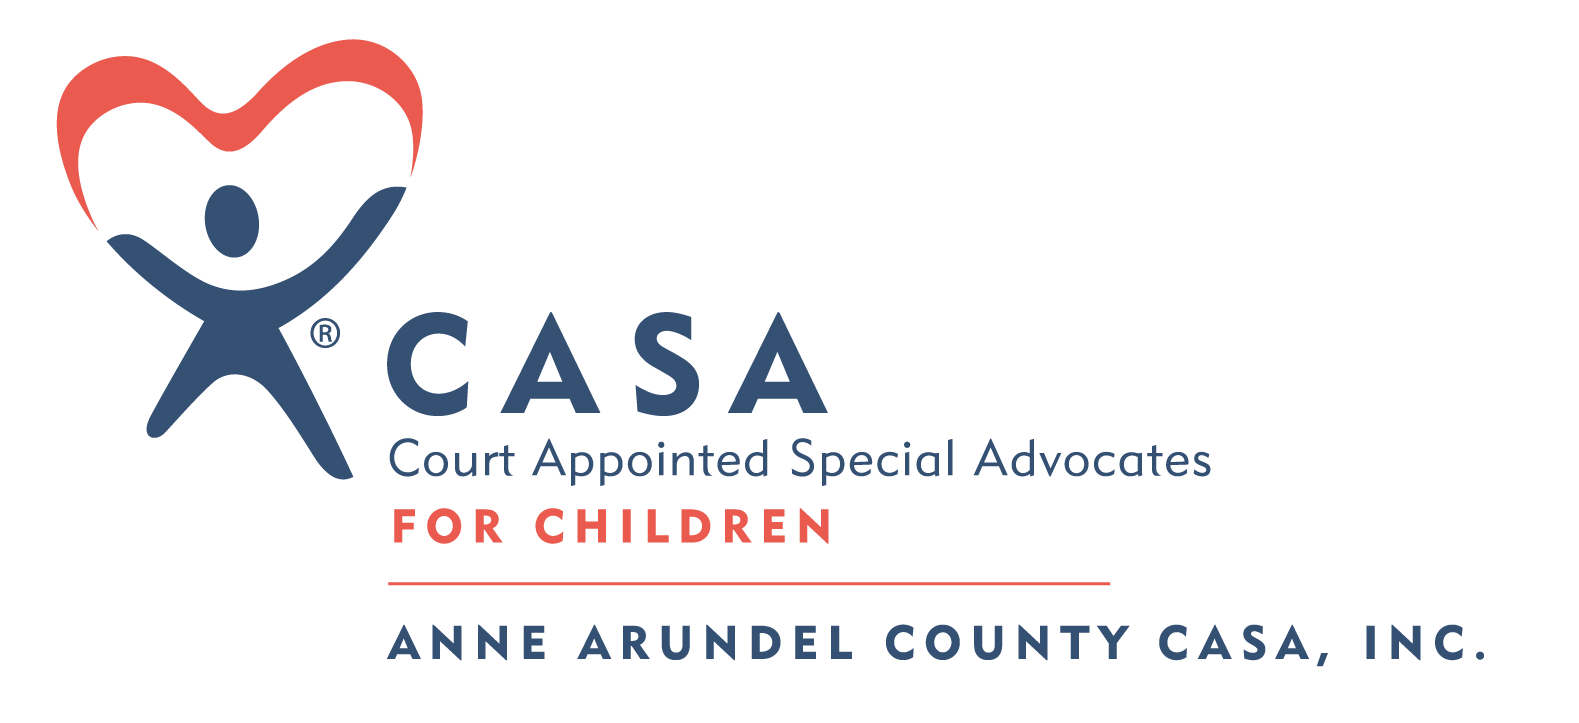 Anne Arundel County CASA, Inc.